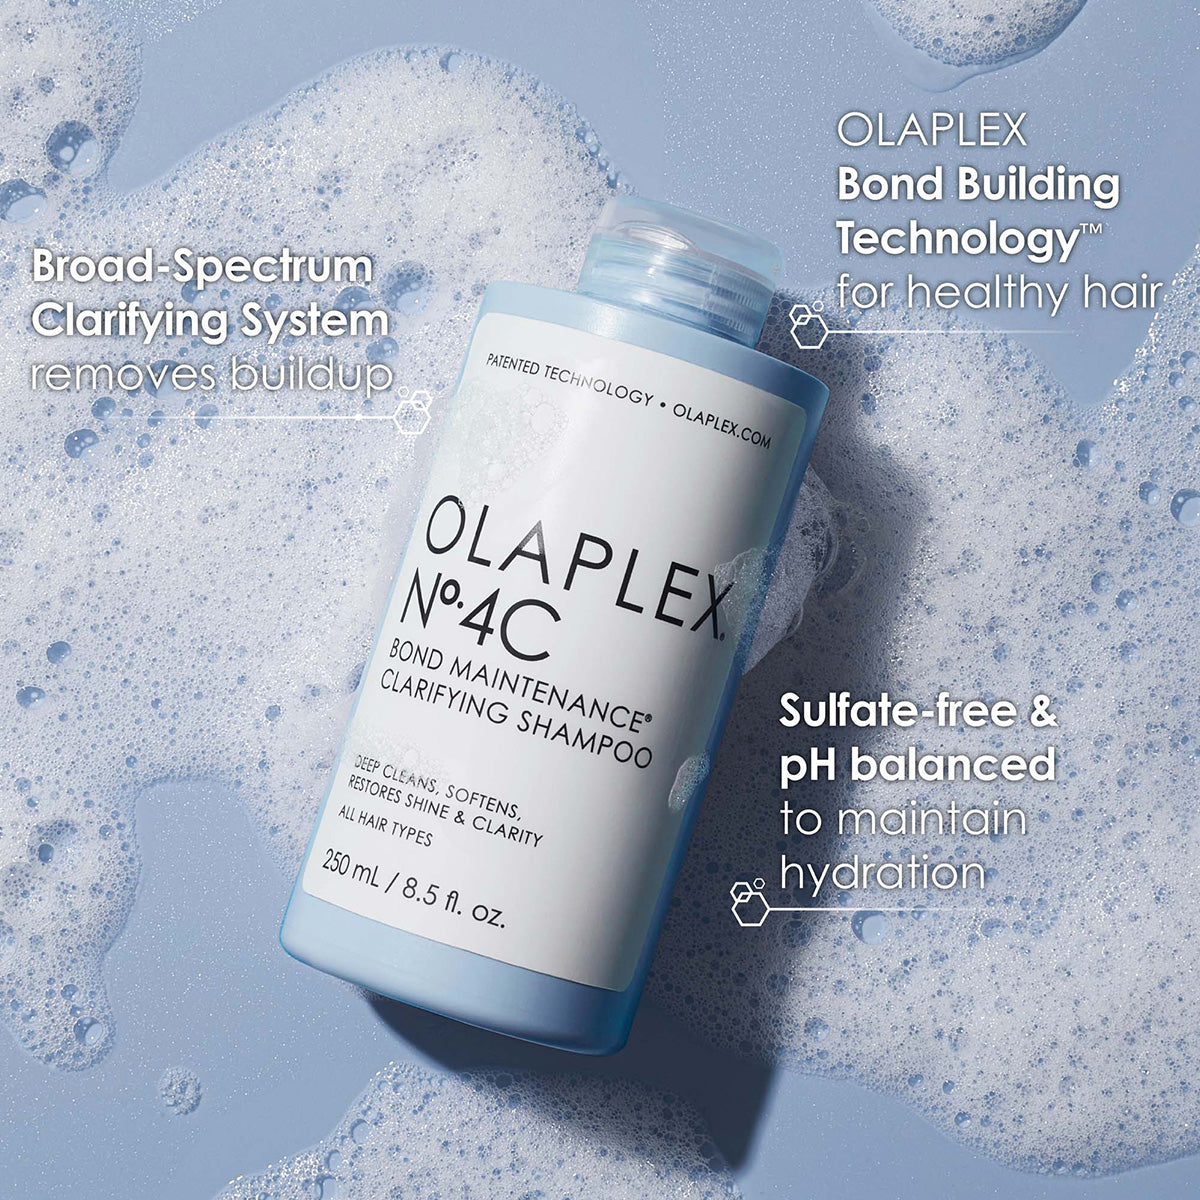 Olaplex Nº.4C Bond Maintenance Clarifying Shampoo